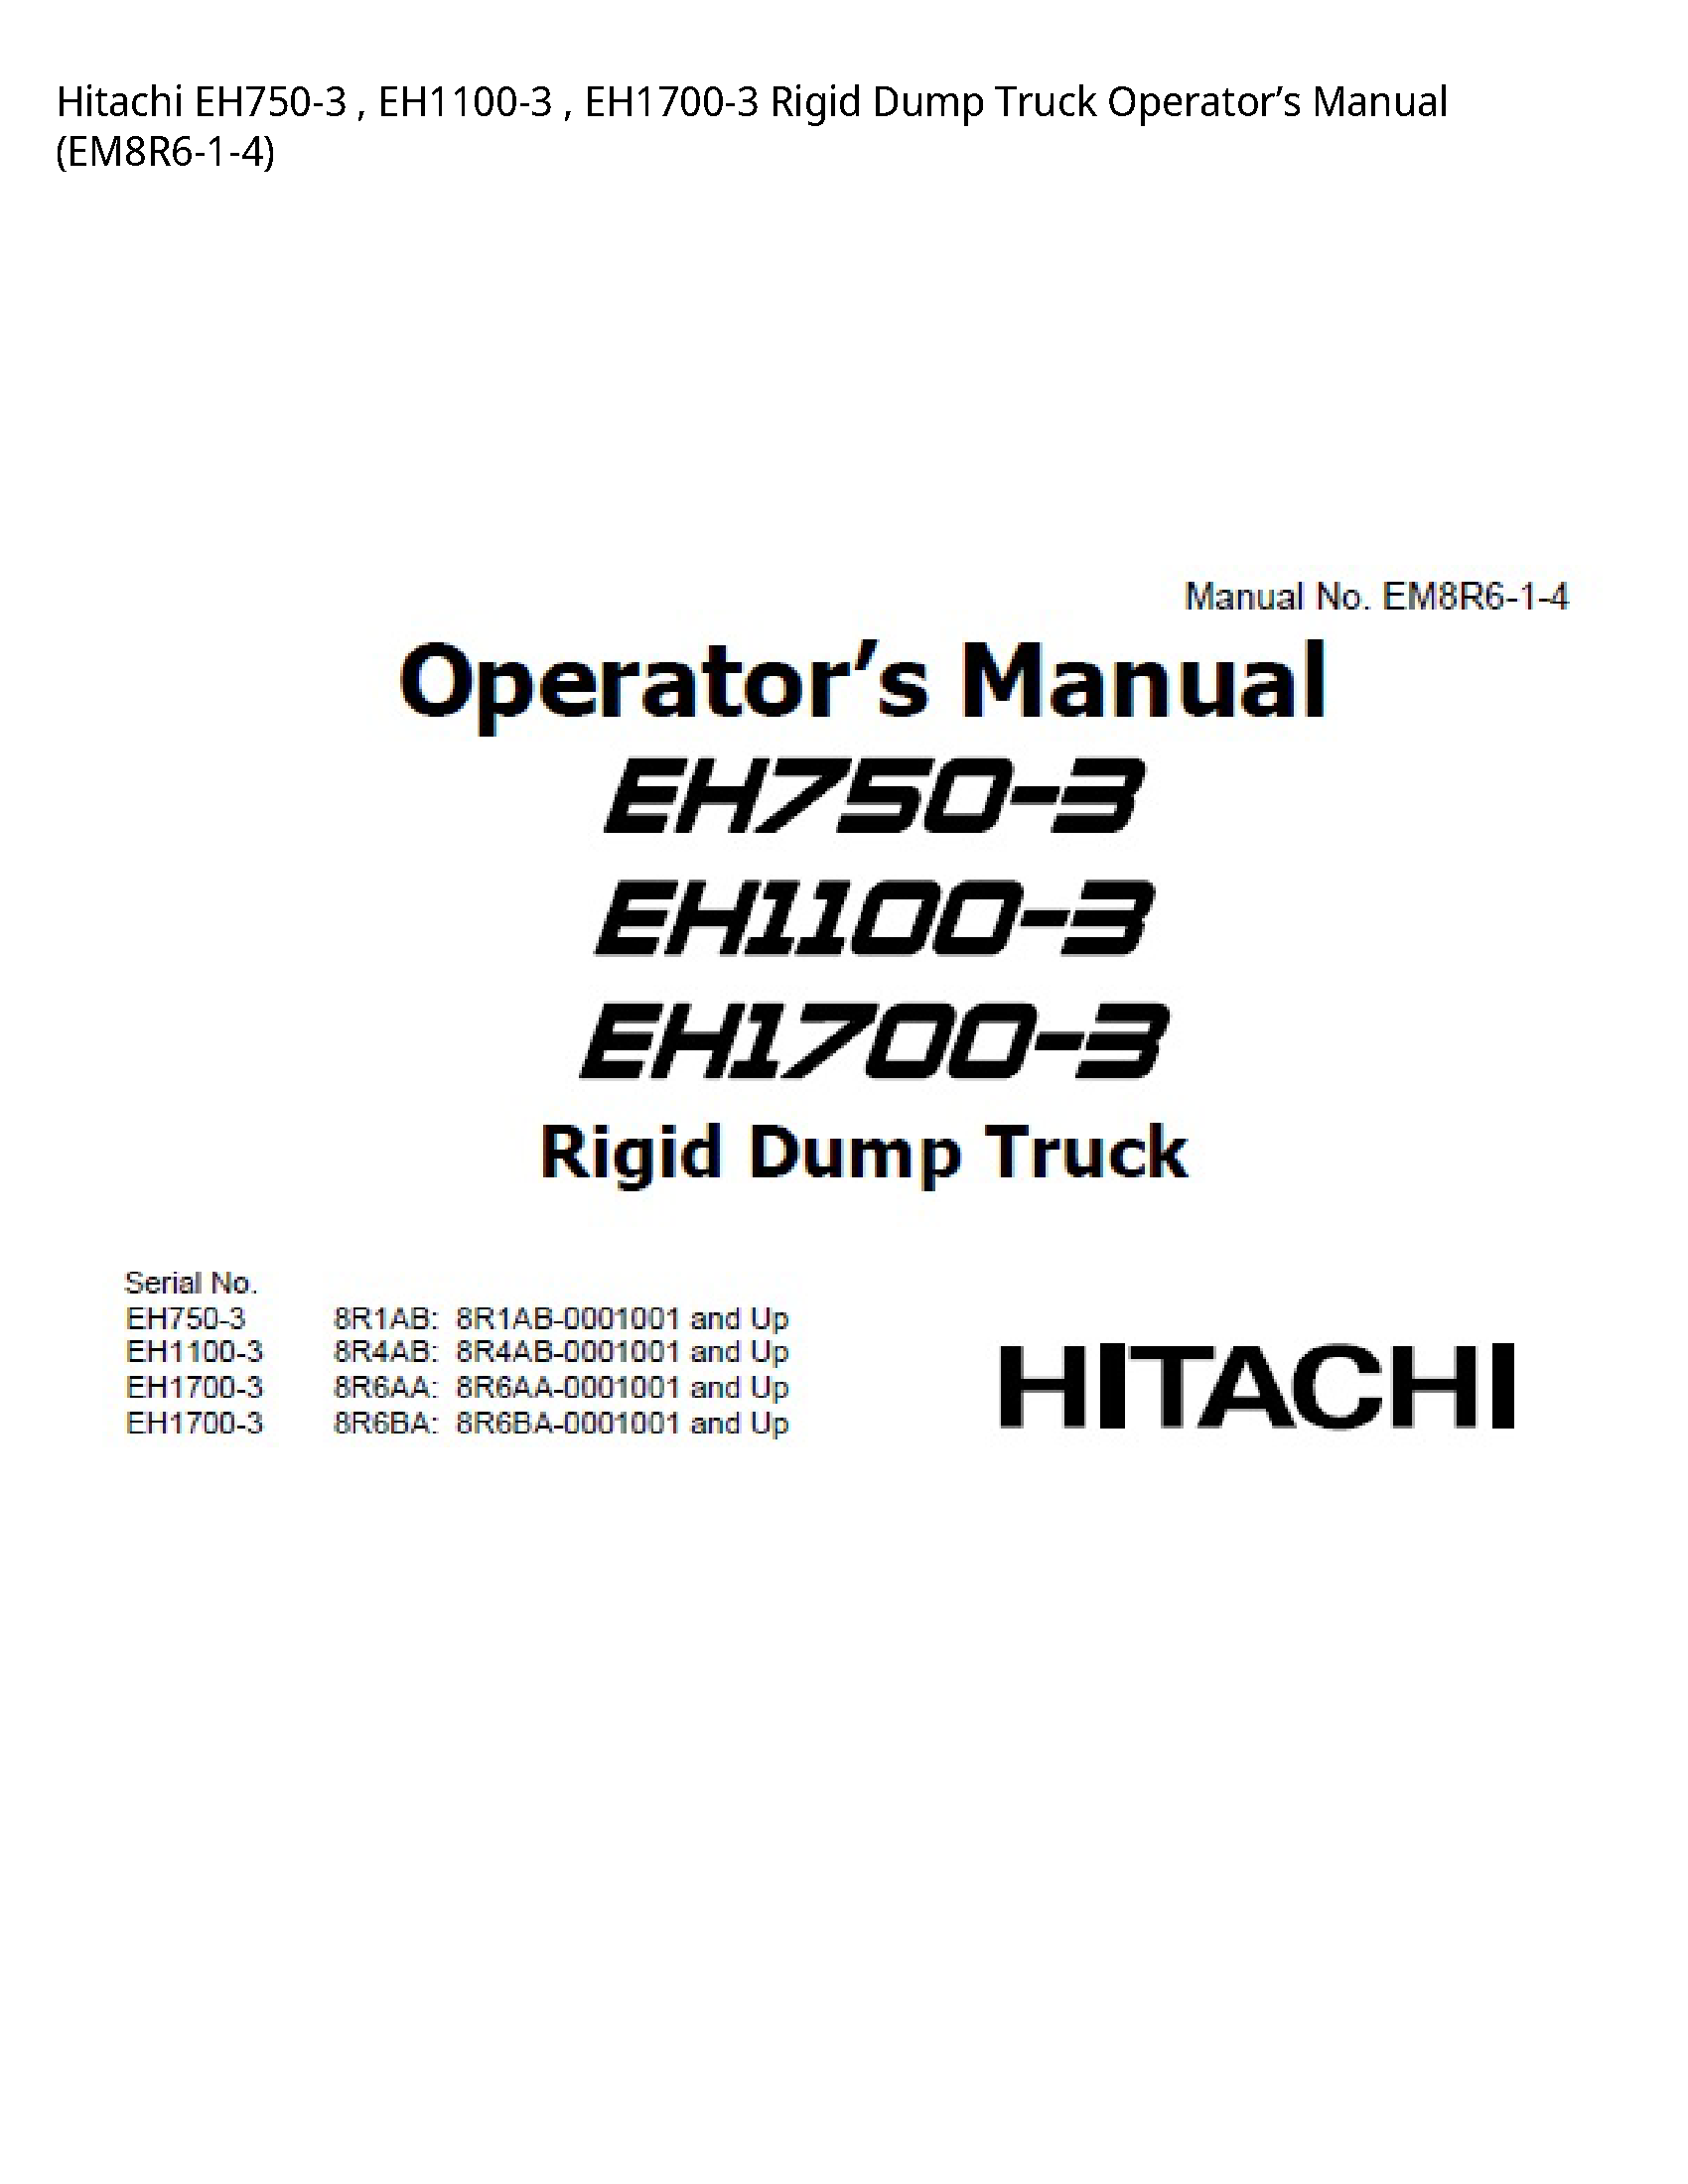 Hitachi EH750-3 Rigid Dump Truck Operator’s manual